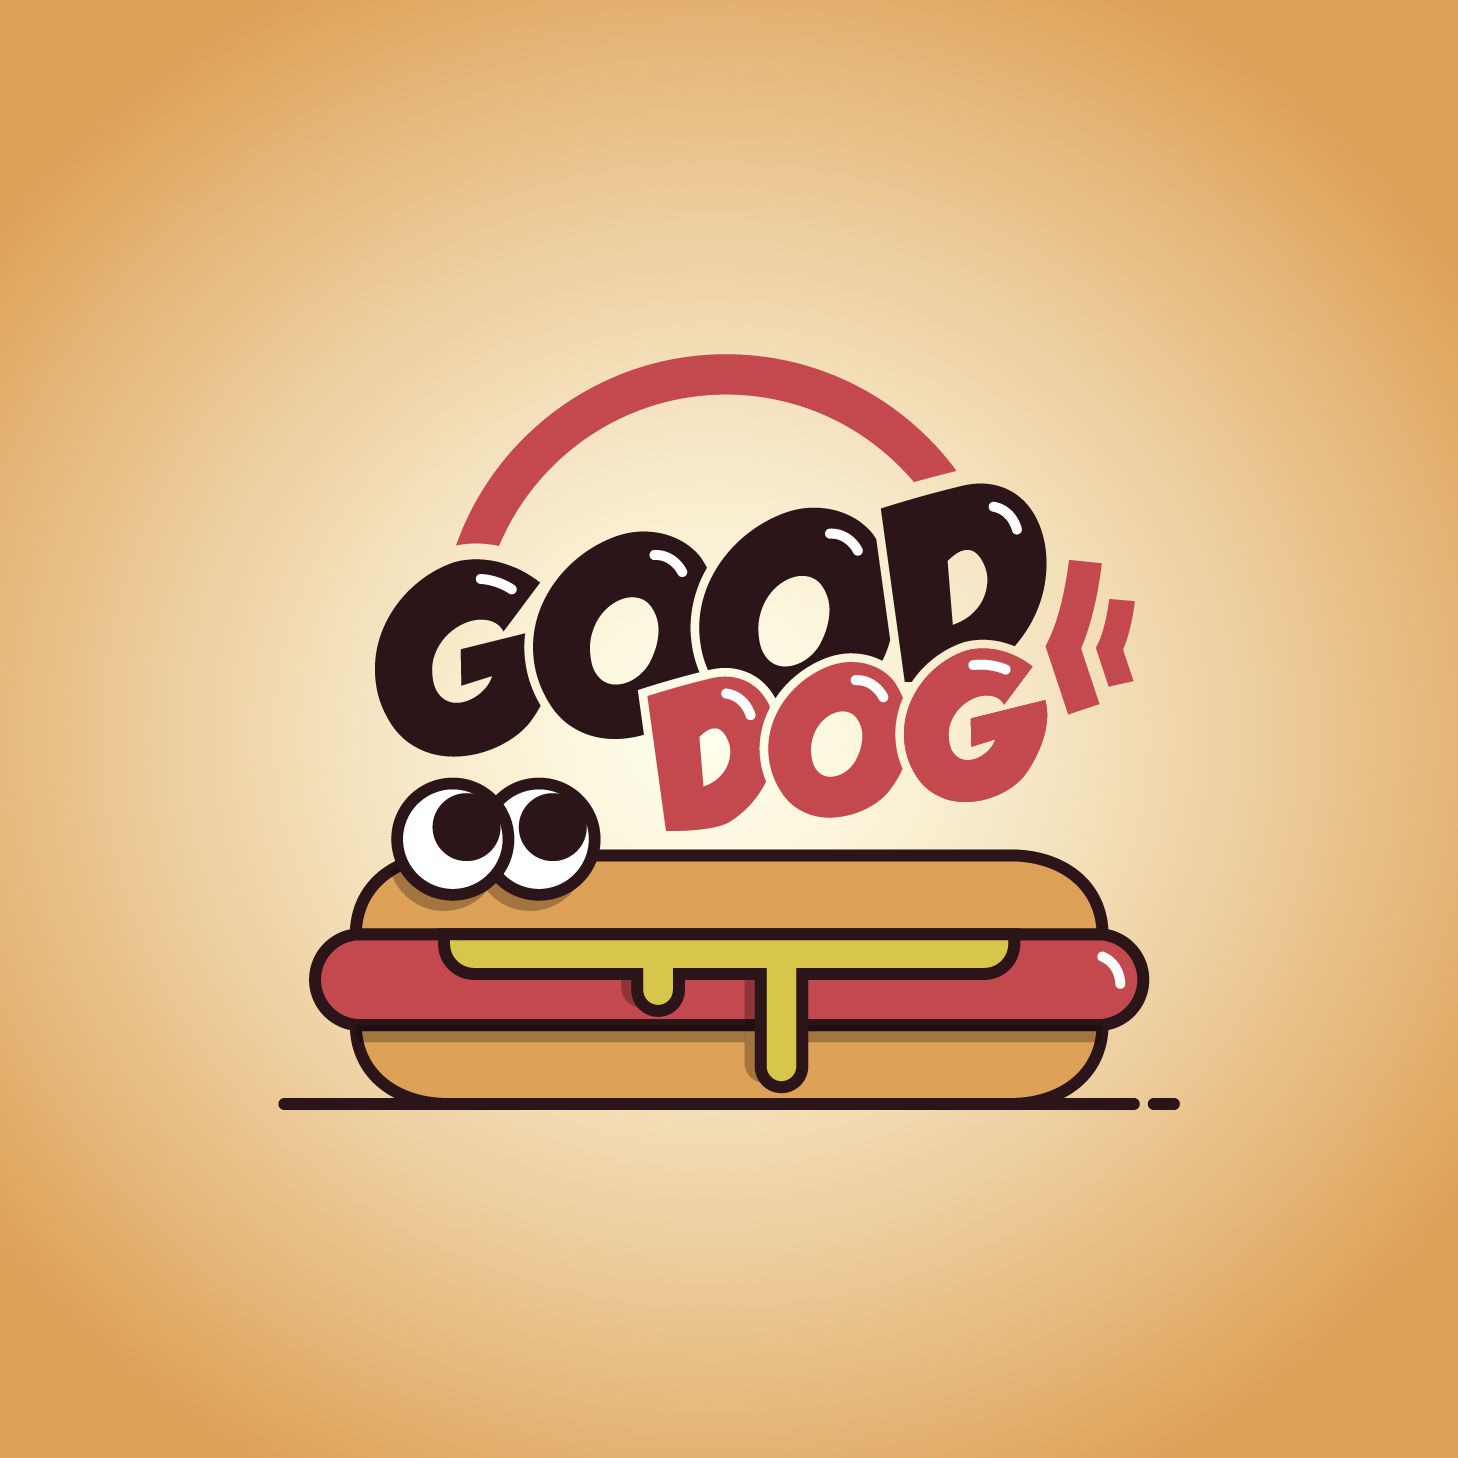 hot dog logo ideas 8